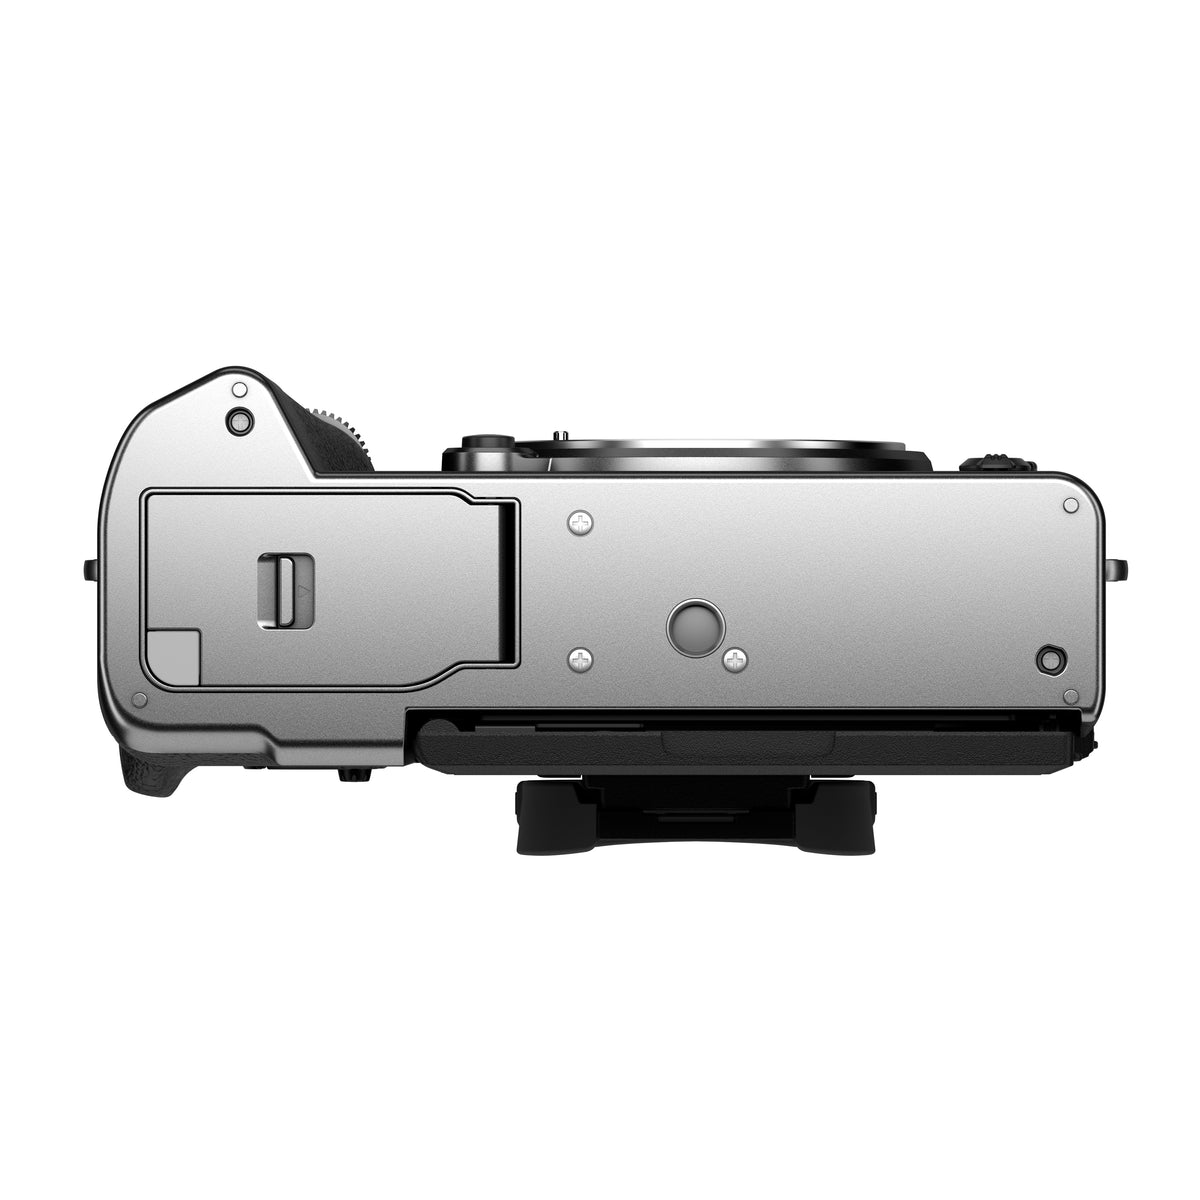 FUJIFILM X-T5 Digital Camera, Body Only, Silver **OPEN BOX** 74101206845